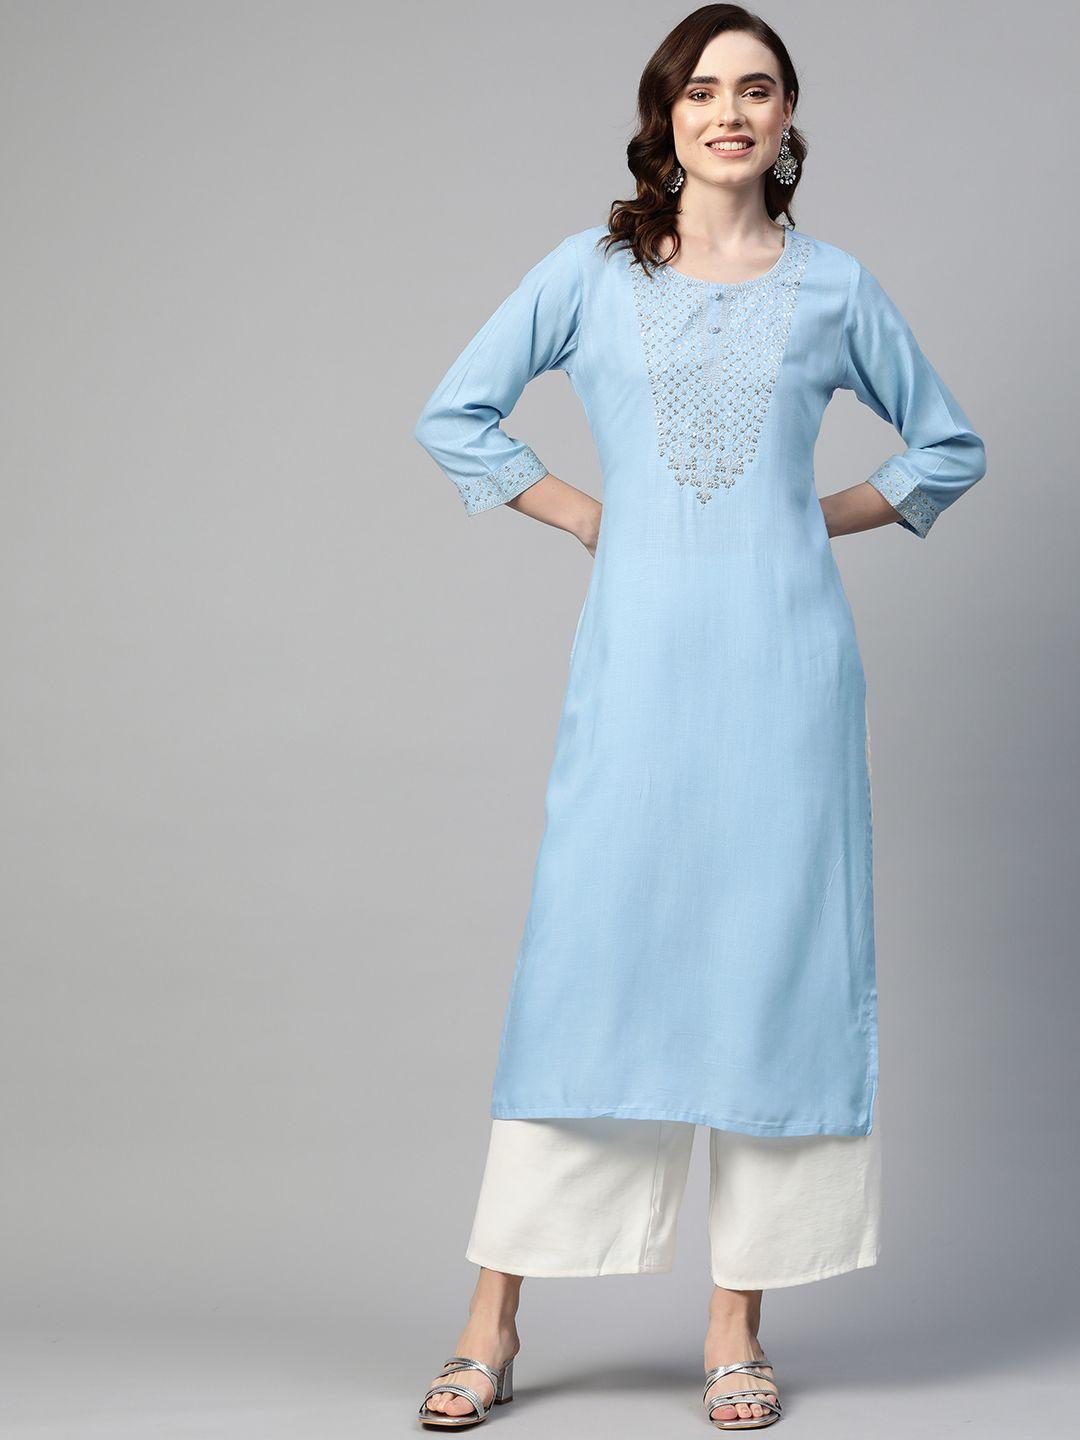 readiprint fashions women blue sequined yoke design kurta